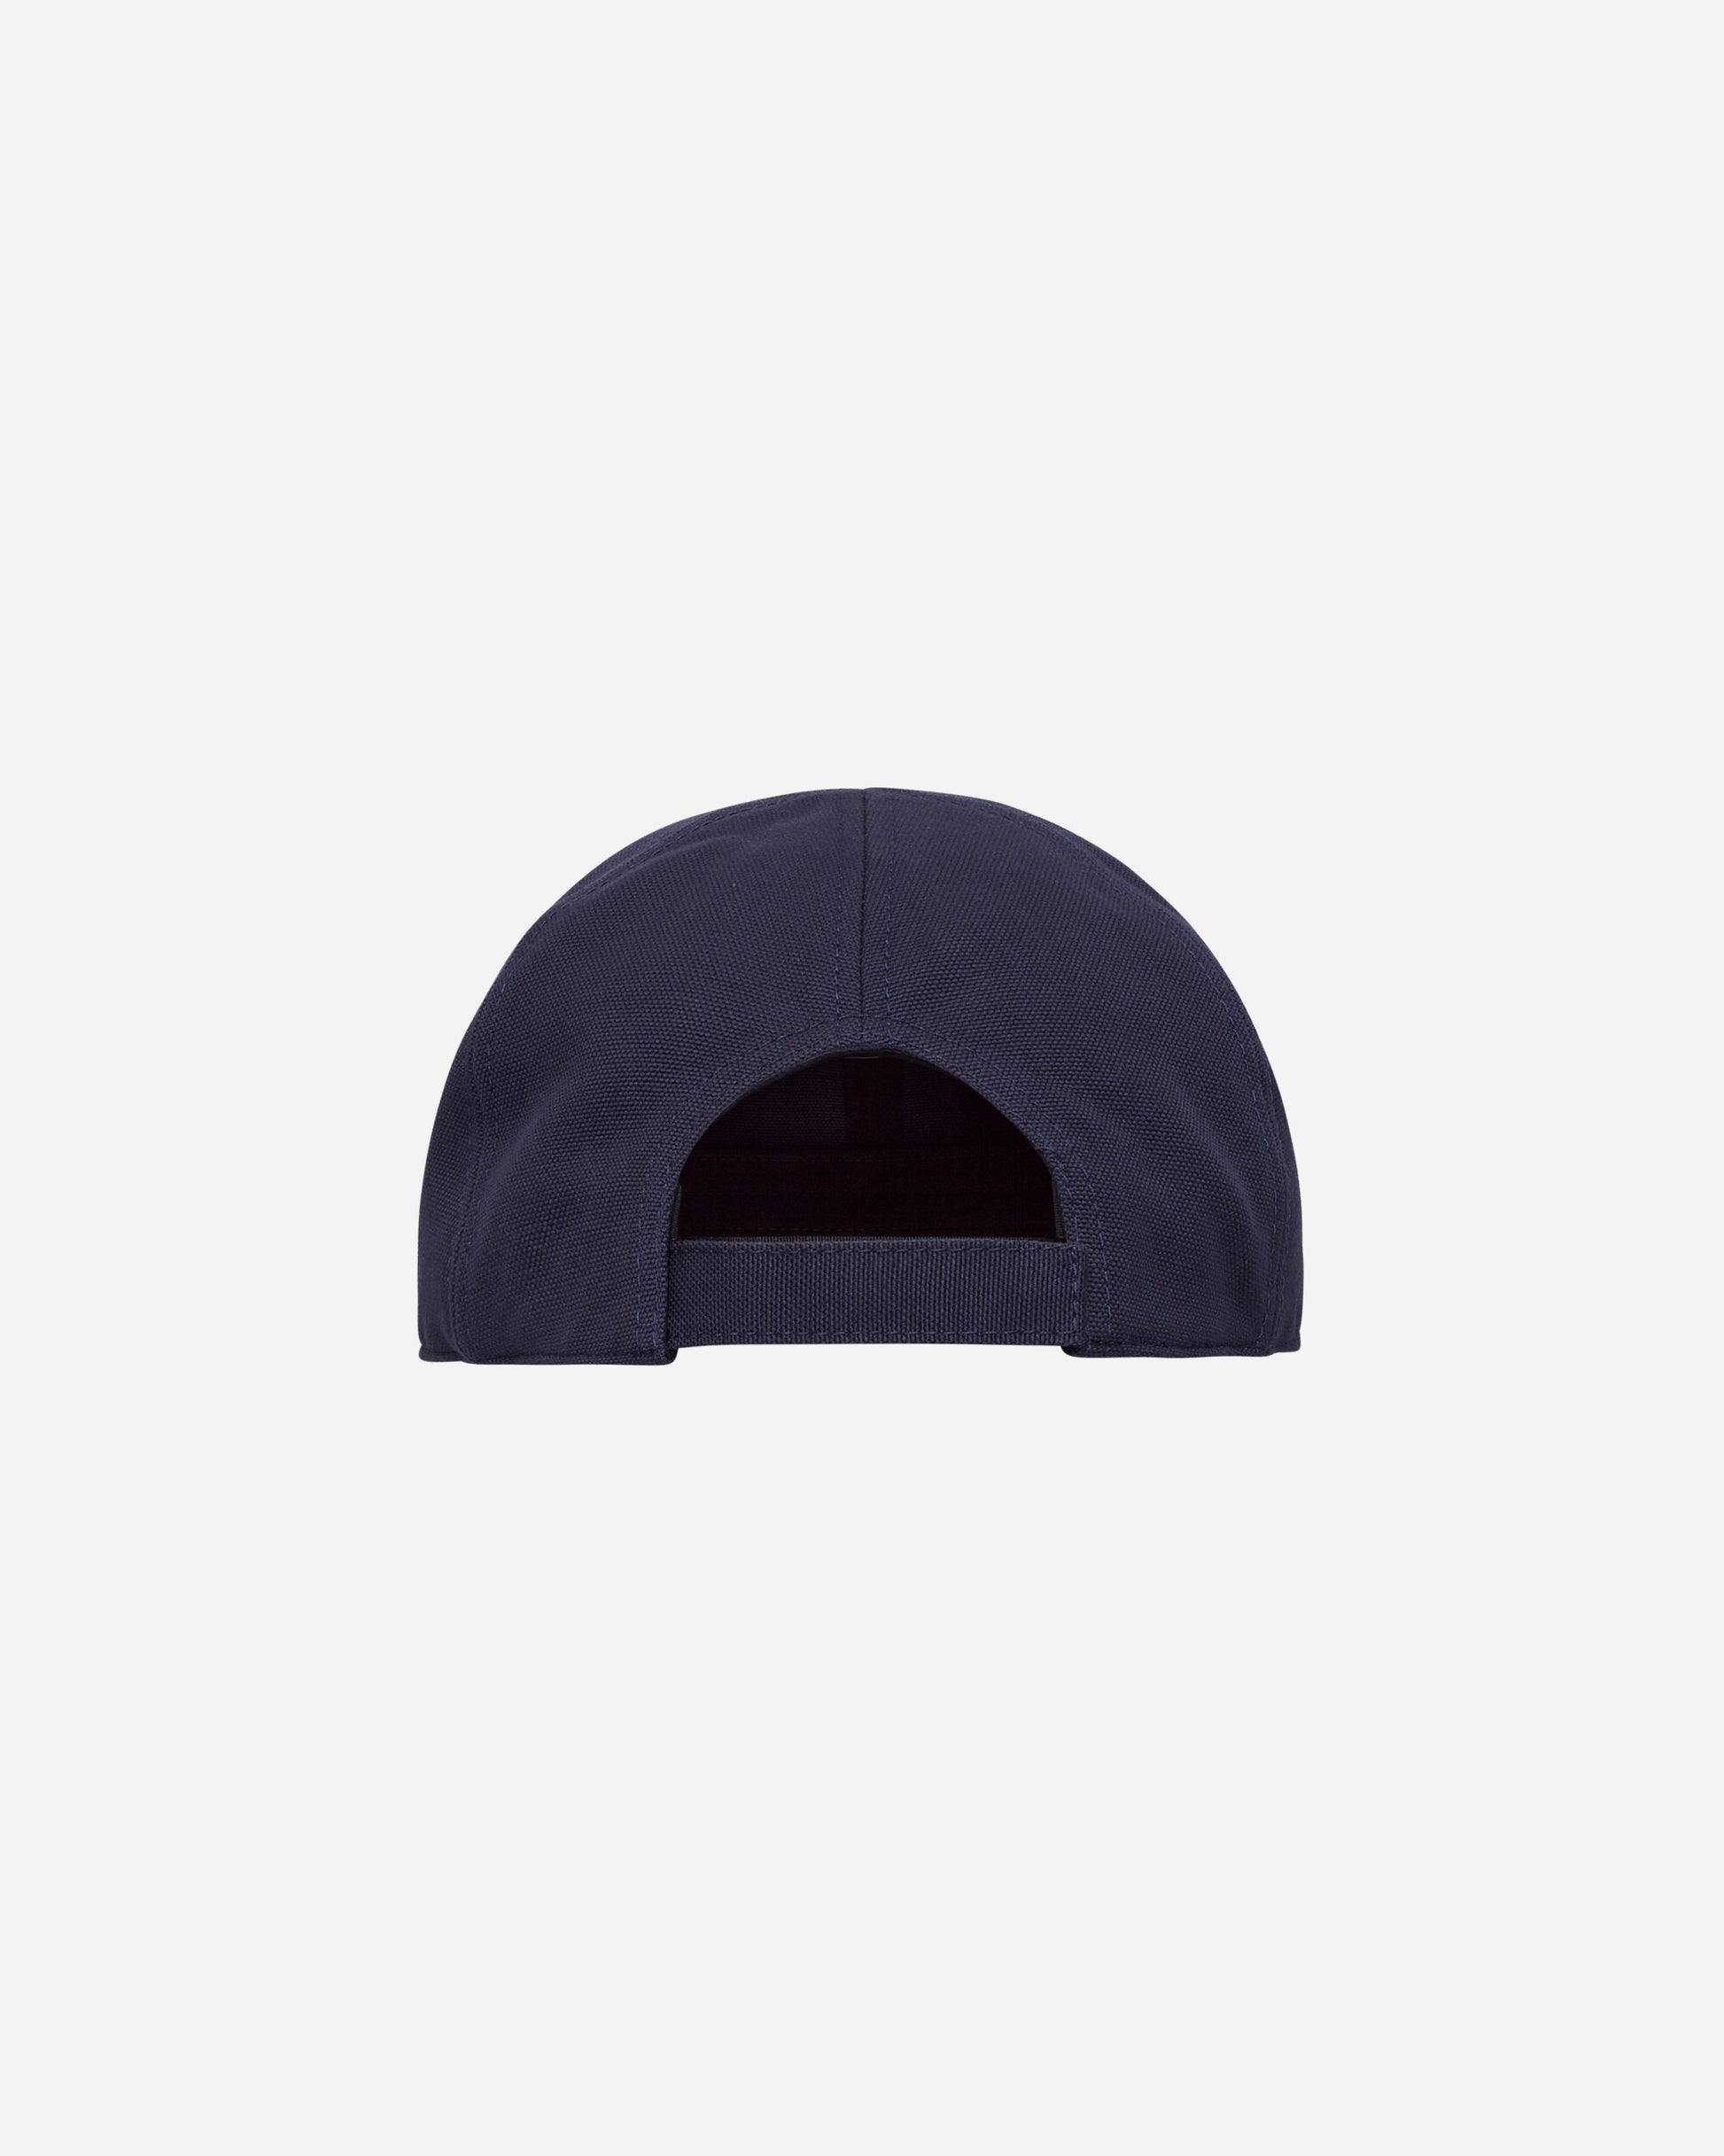 Stone Island Cappello Royal Blue Hats Caps 8015991X5 V0027